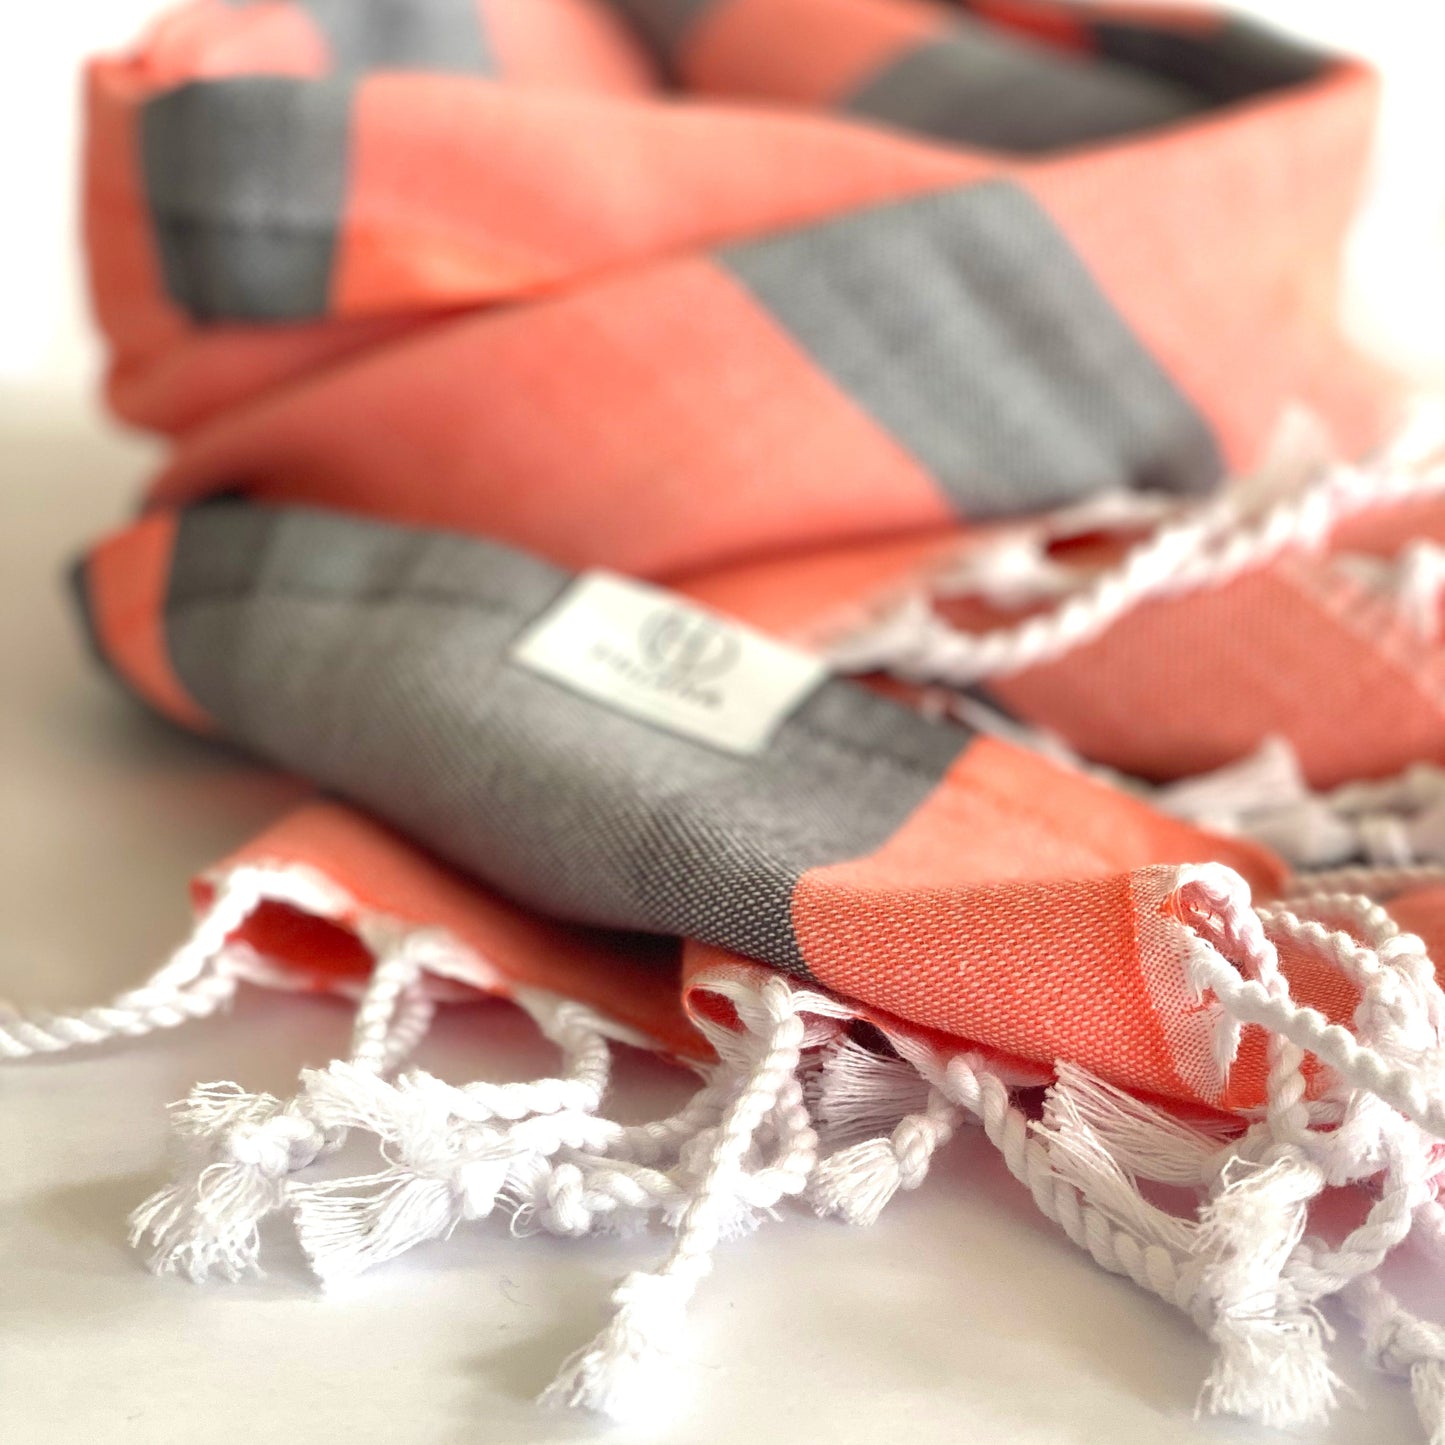 
                  
                    Samara Gray - Orange Turkish Towel by Hilana Upcycled Cotton
                  
                